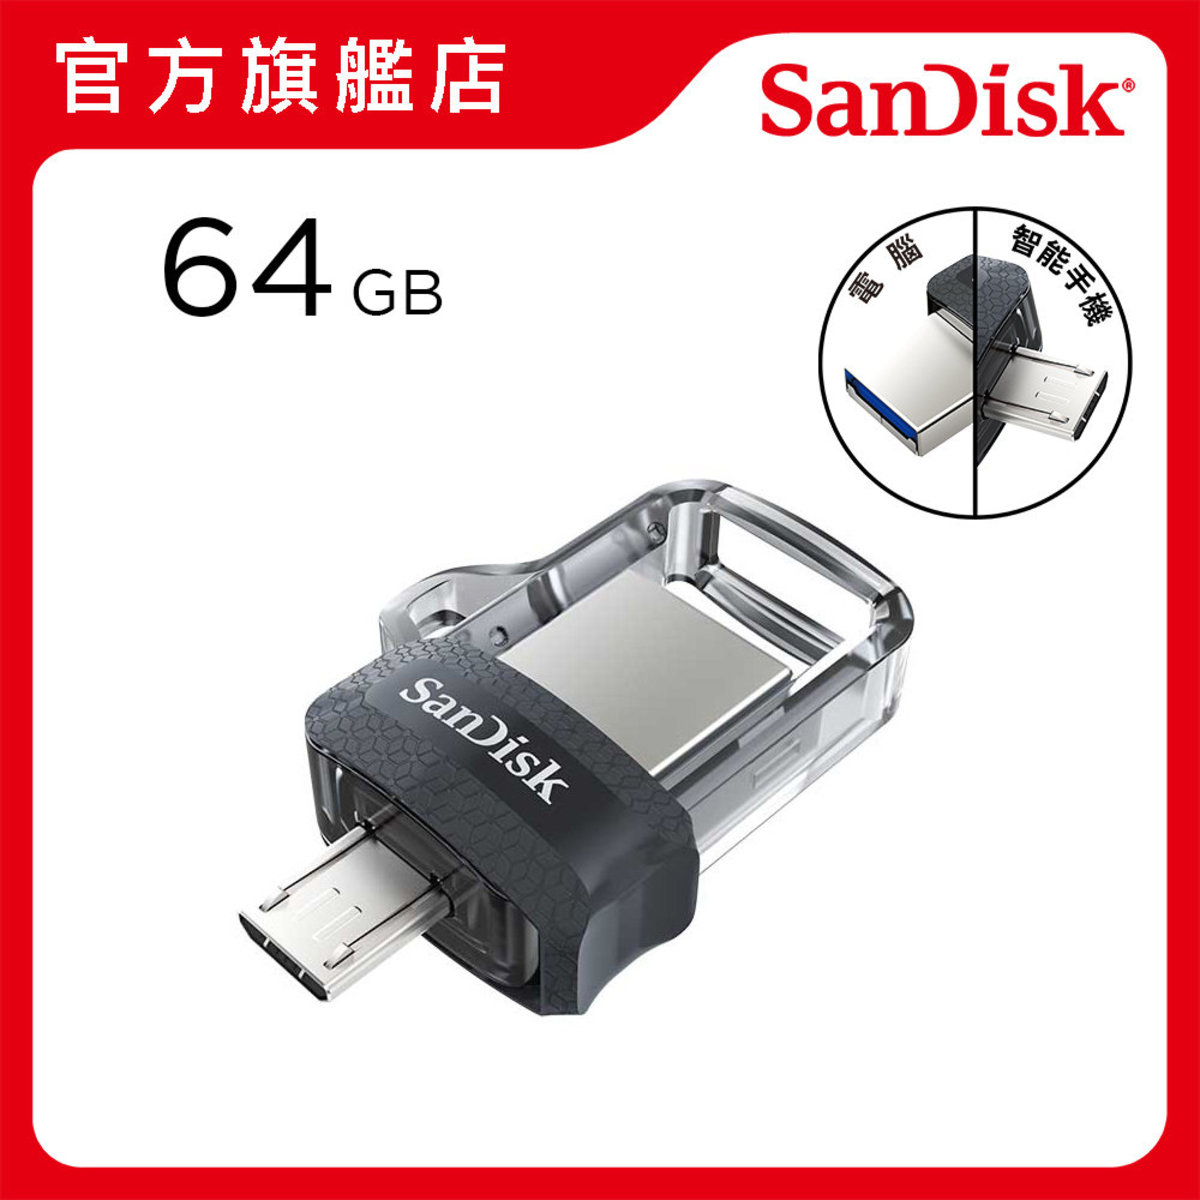 Ultra Dual 64GB Drive m3.0 Memory Stick (SDDD3-064G-G46)